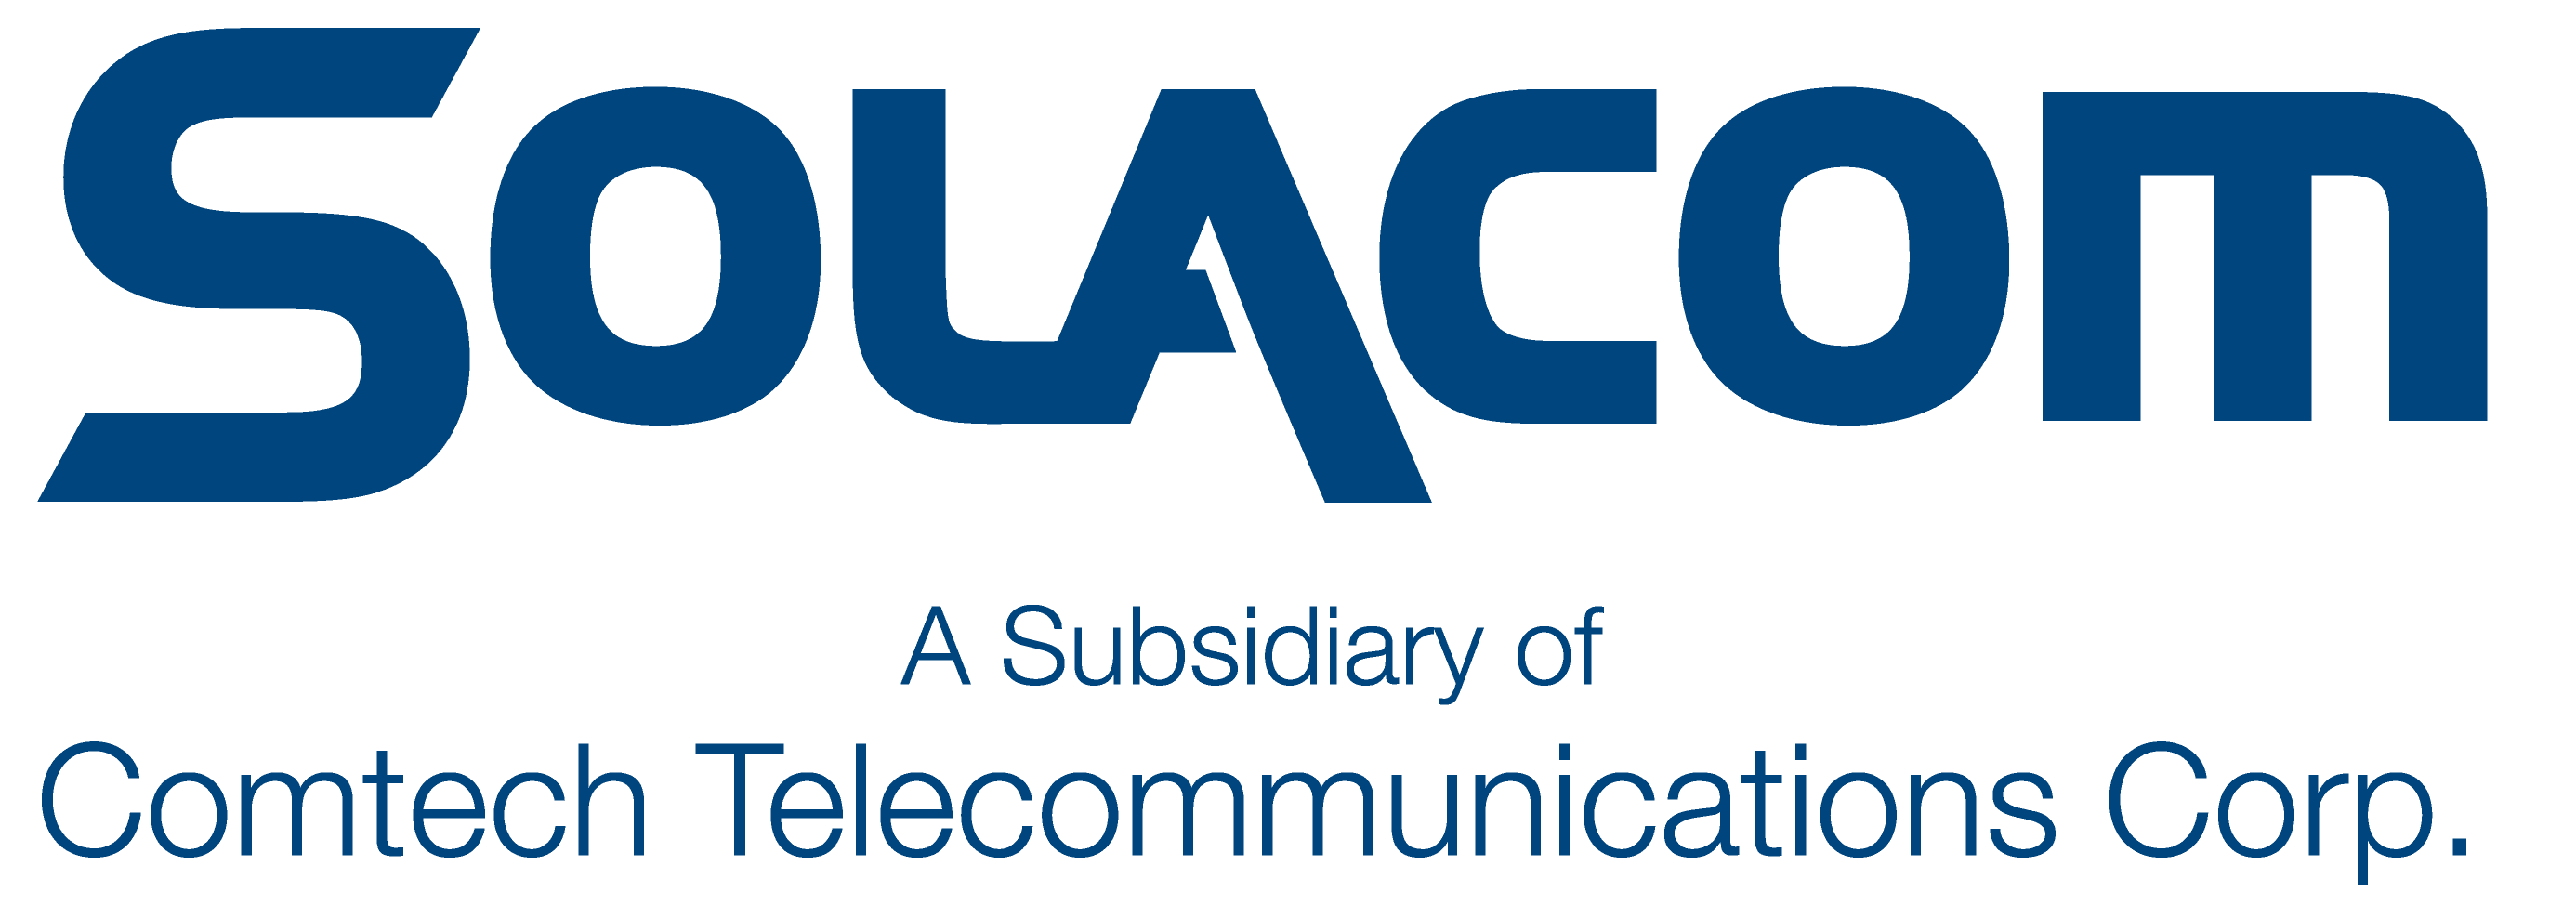 Solacom, a subsidiary of Comtech Telecommunications Corp.